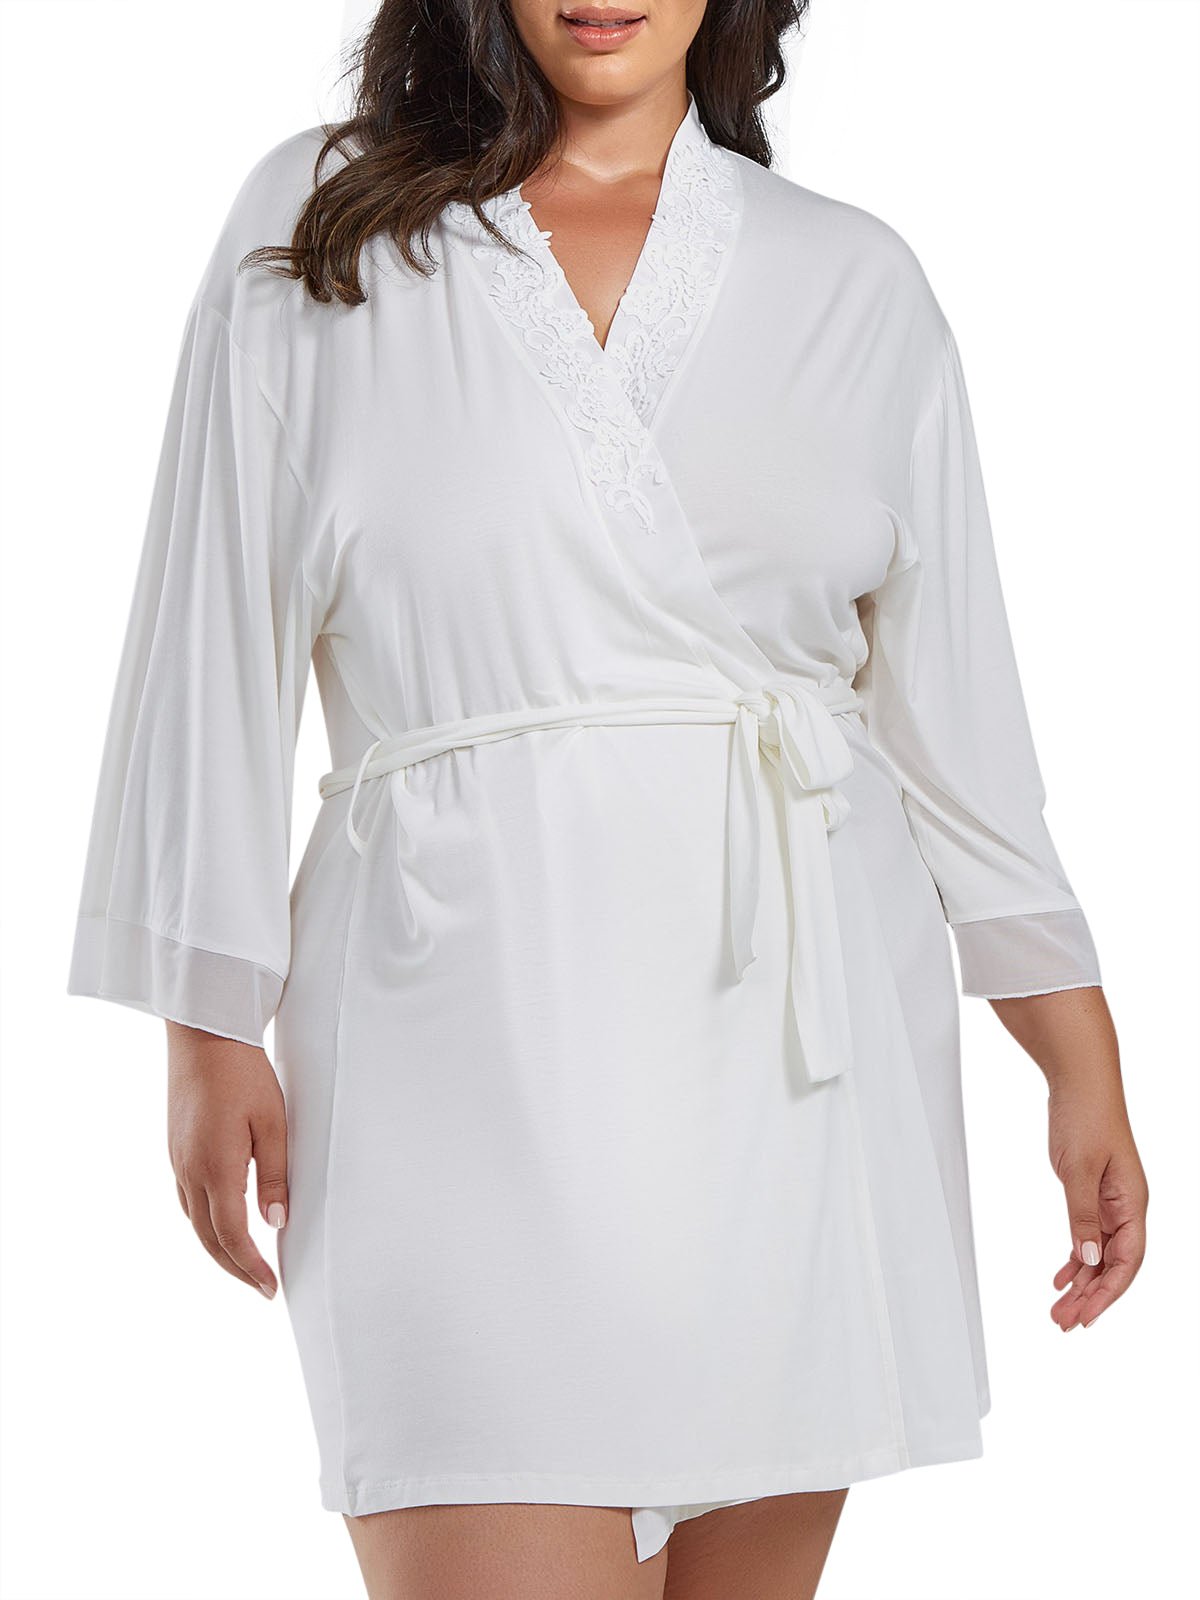 iCollection Robe Women's Divya Plus Size Robe Loungewear